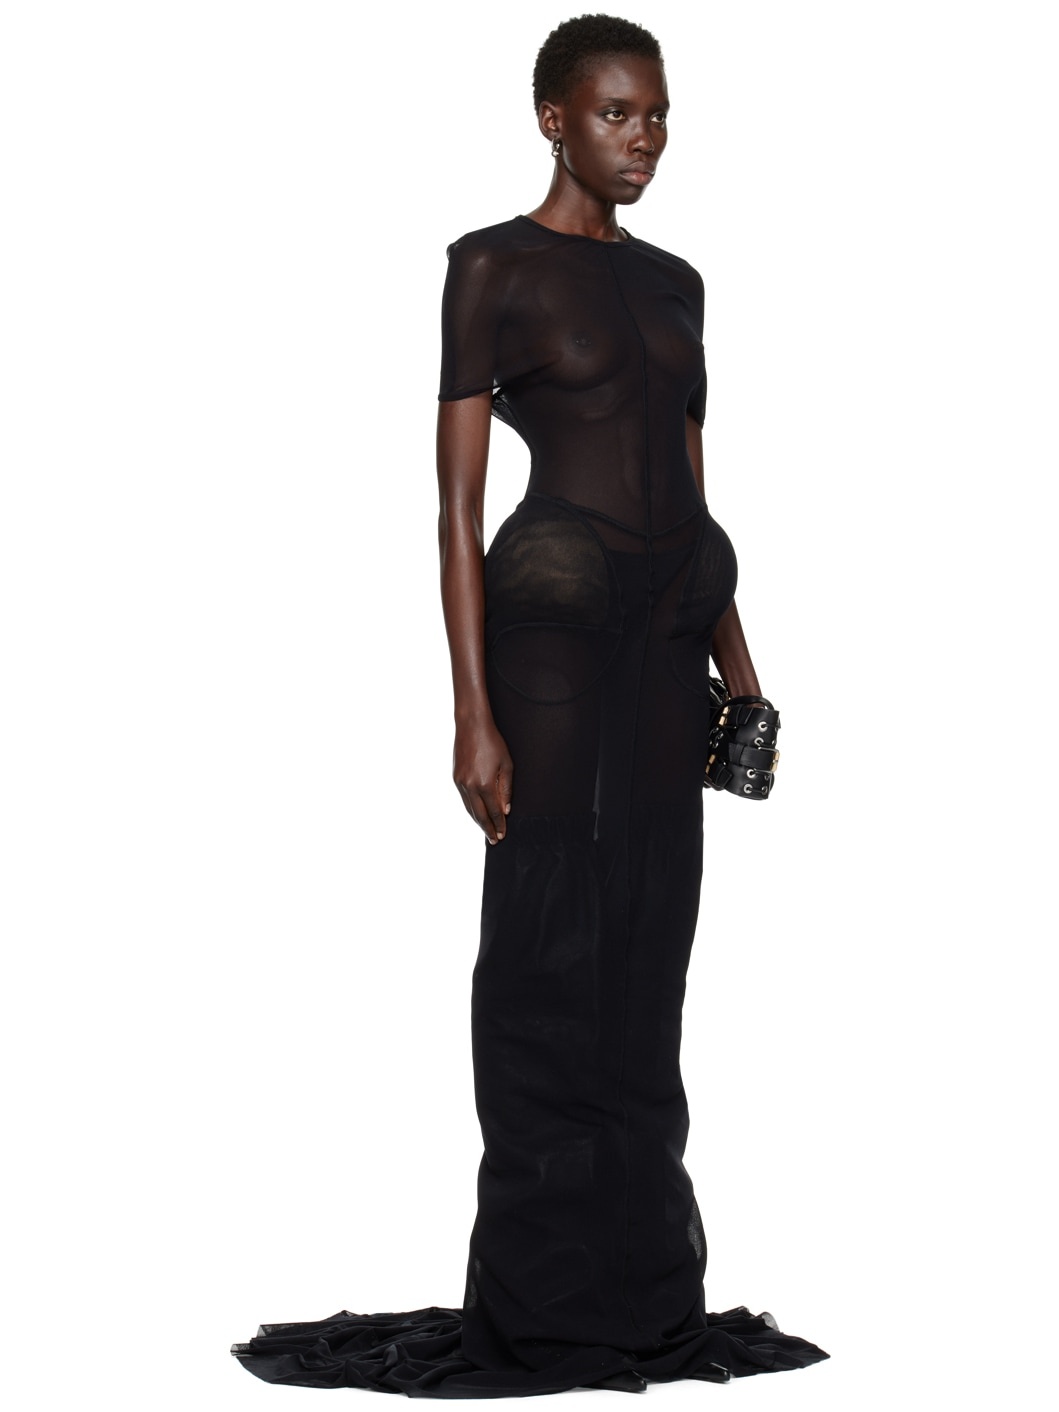 Black Shayne Oliver Edition Maxi Dress - 2